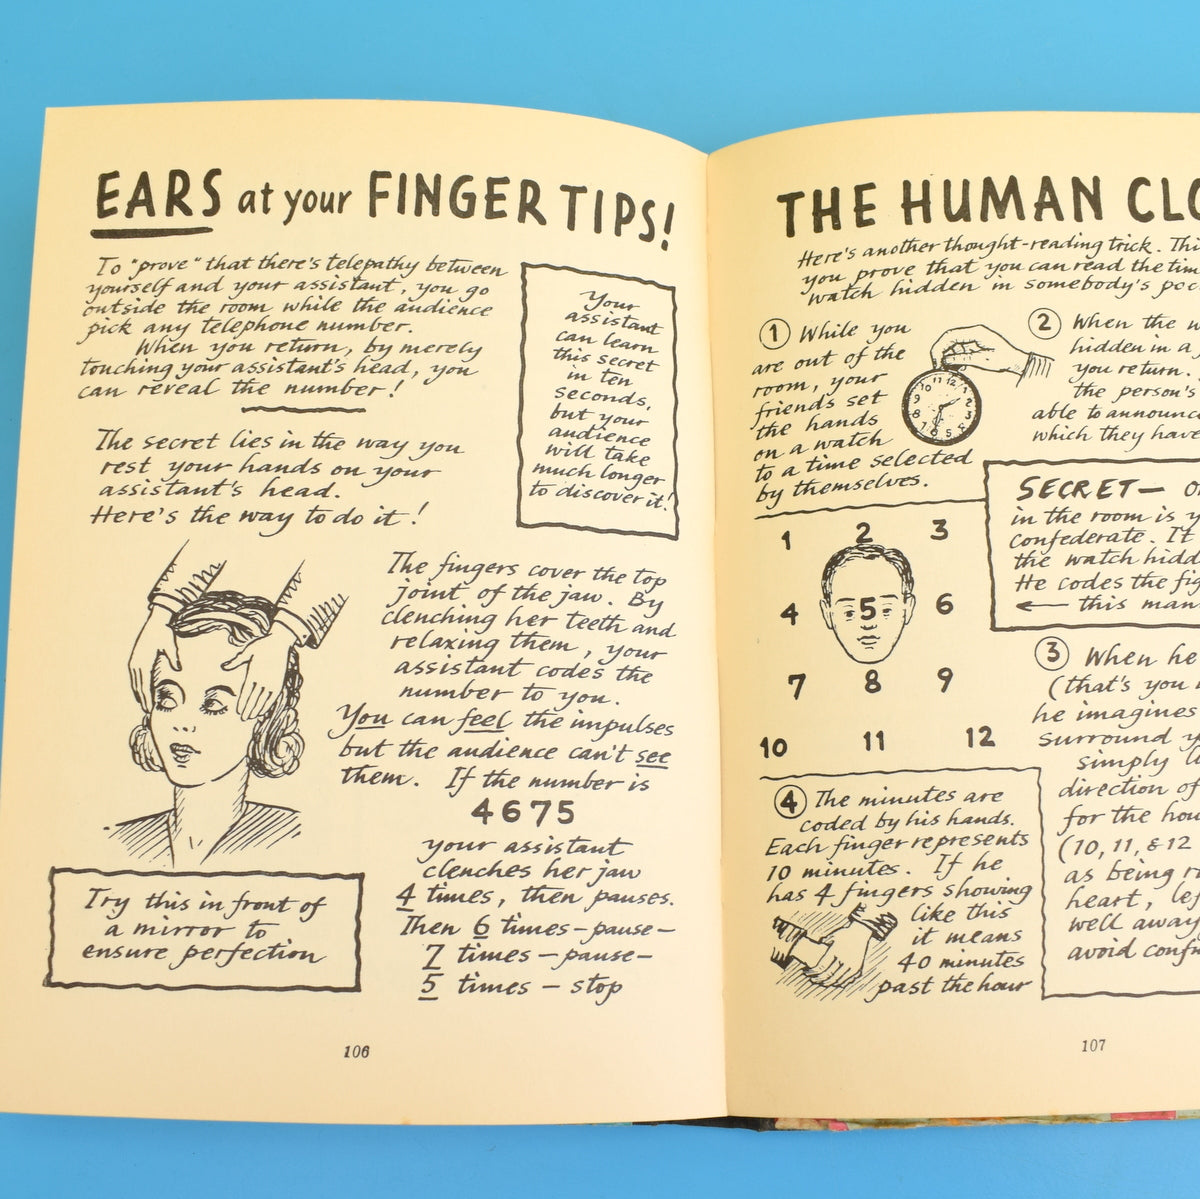 Vintage 1950s Book of Magic Tricks - Will Dexter